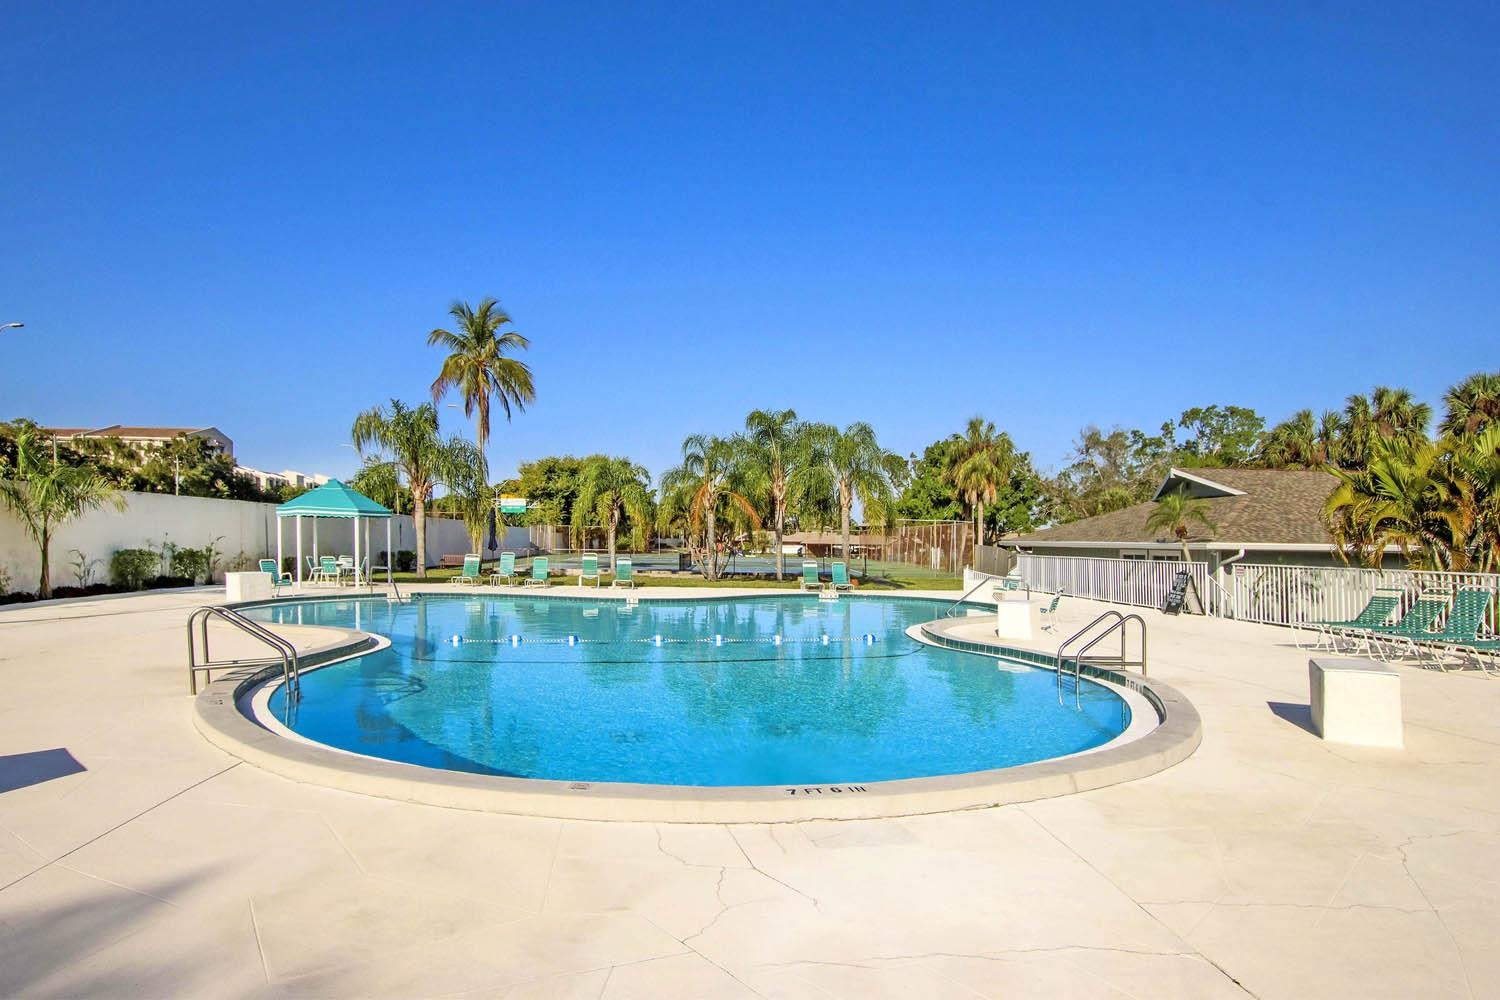 4269 Island Cir, Fort Myers, Florida 33919, 2 Bedrooms Bedrooms, ,2 BathroomsBathrooms,Condo,For Sale,Island Cir,2240334